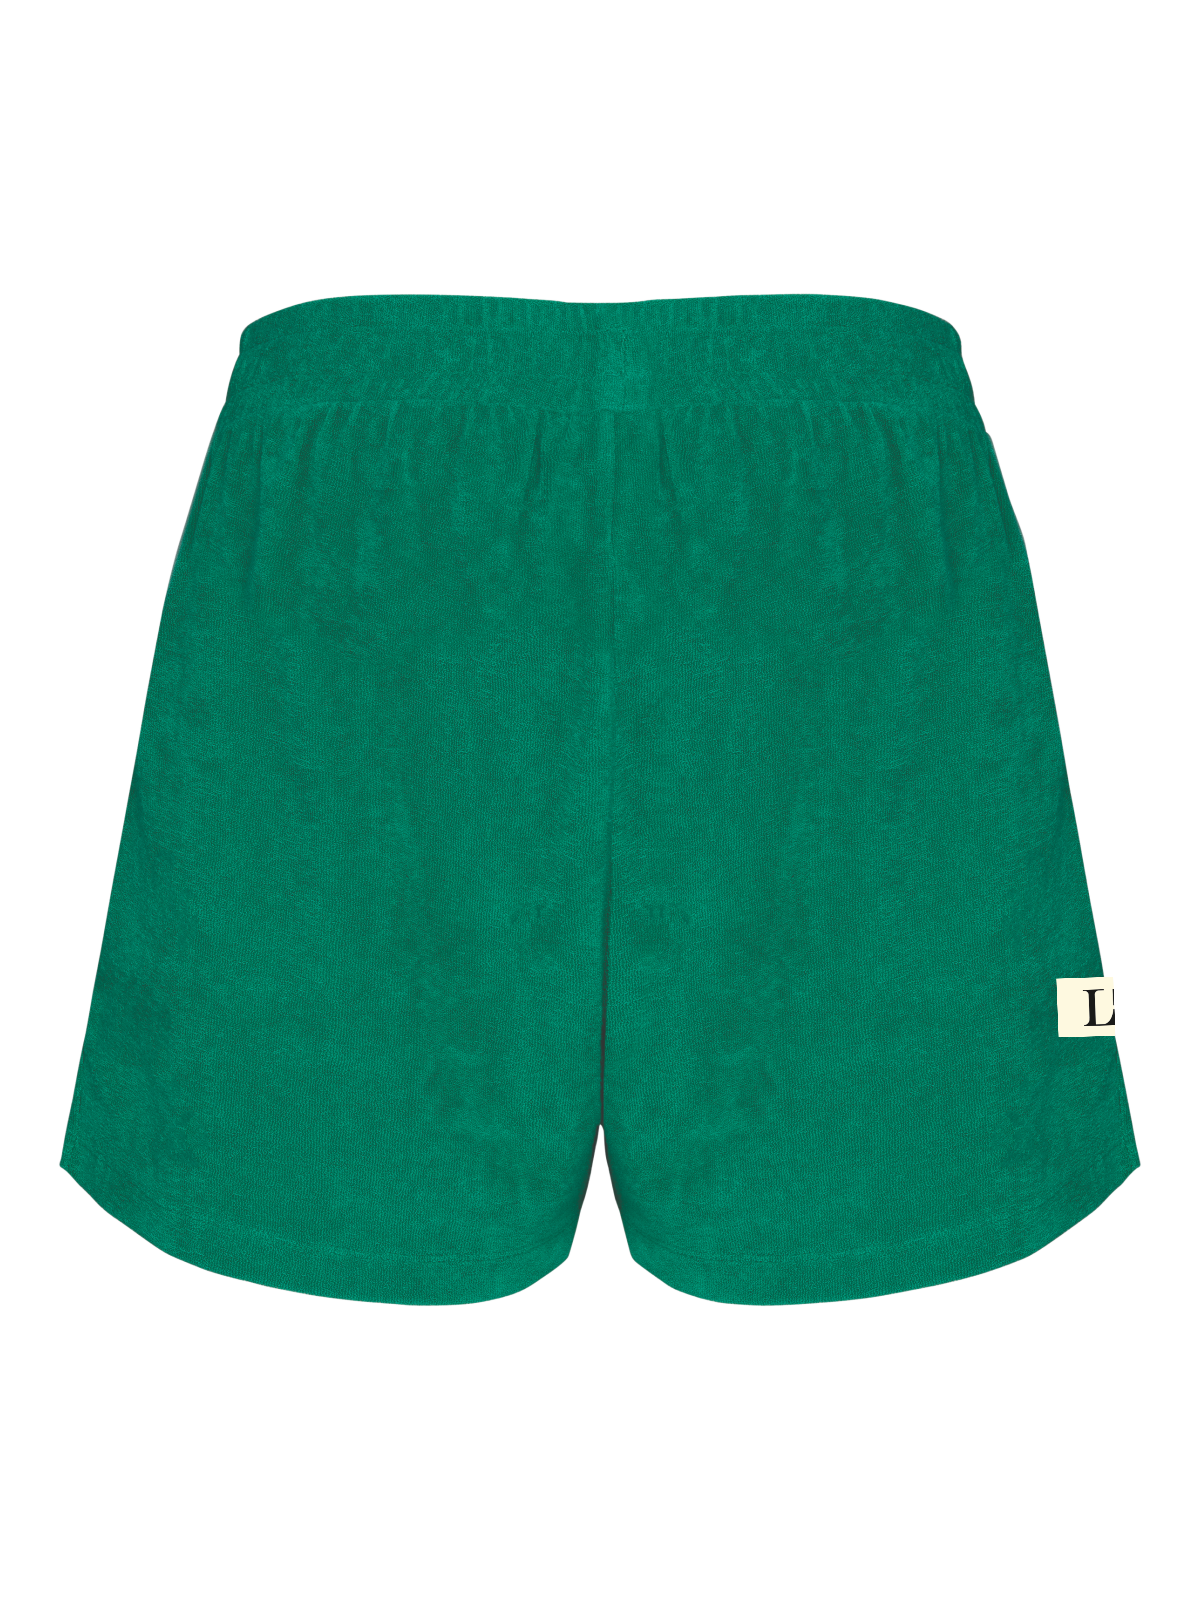 LL Terry Towel Shorts green